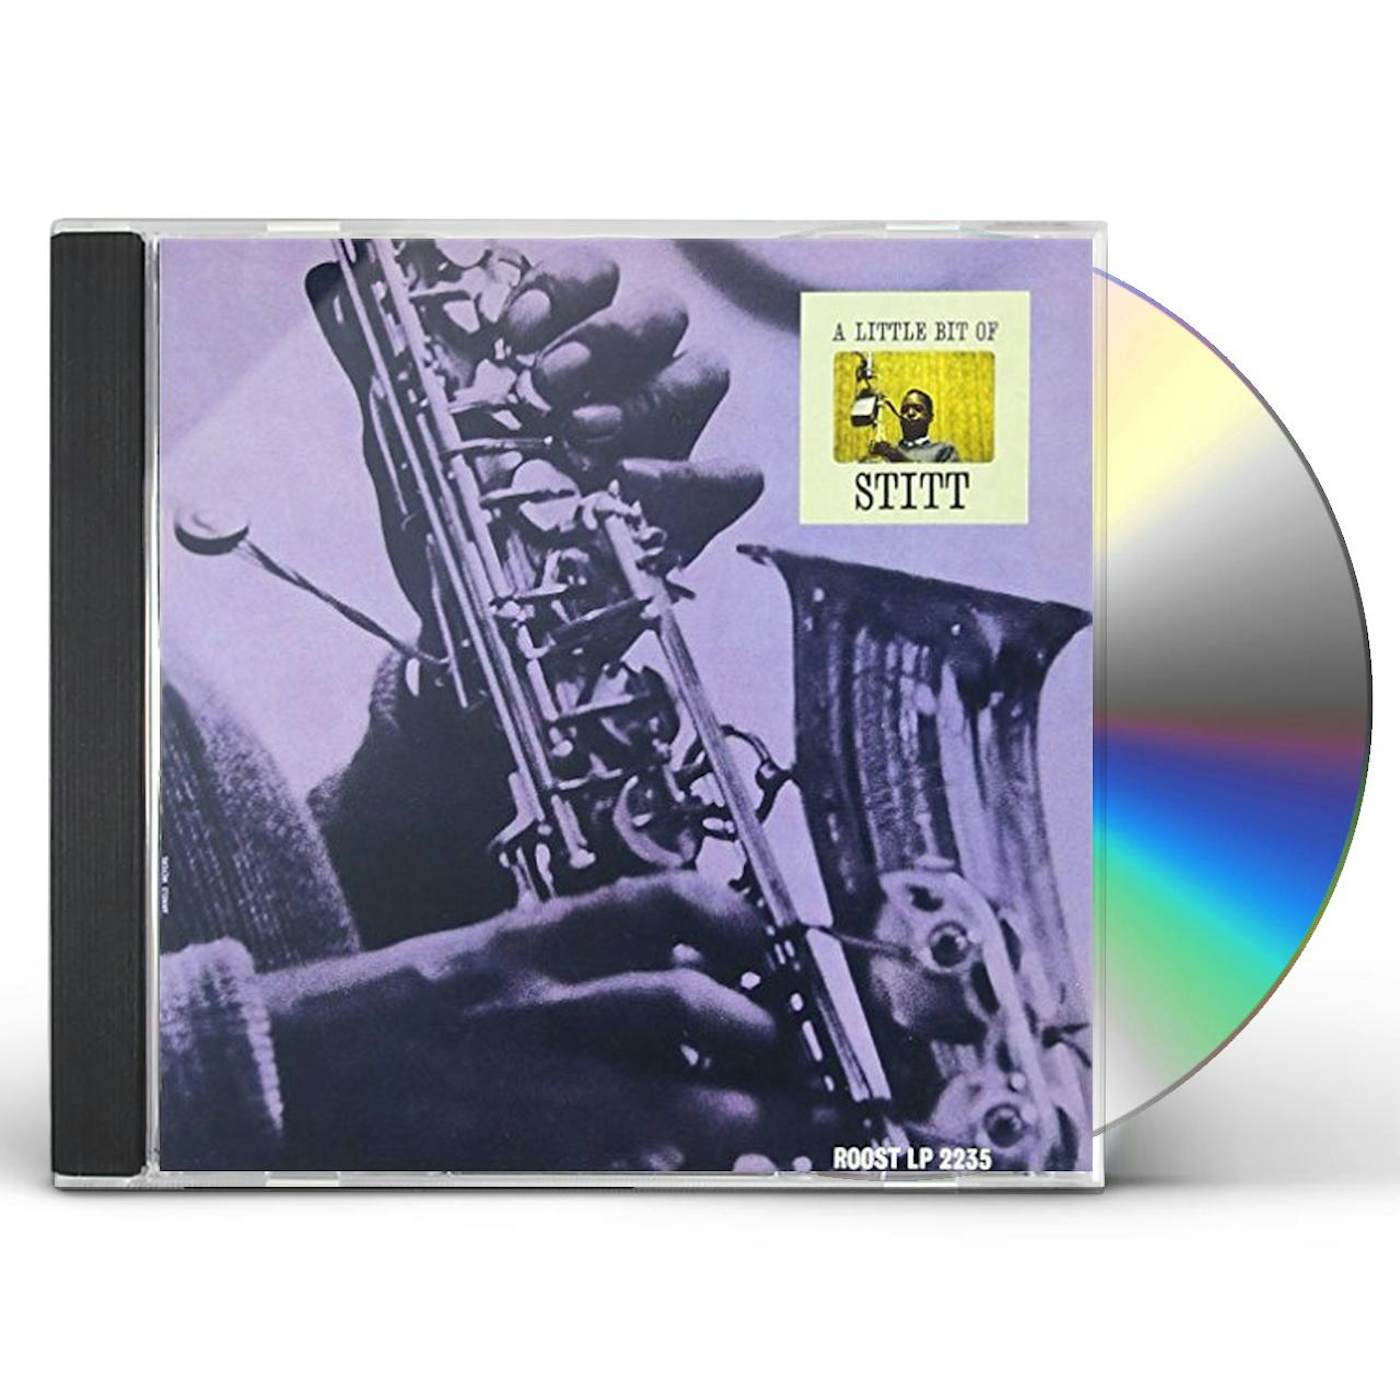 Sonny Stitt LITTLE BIT OF STITT CD